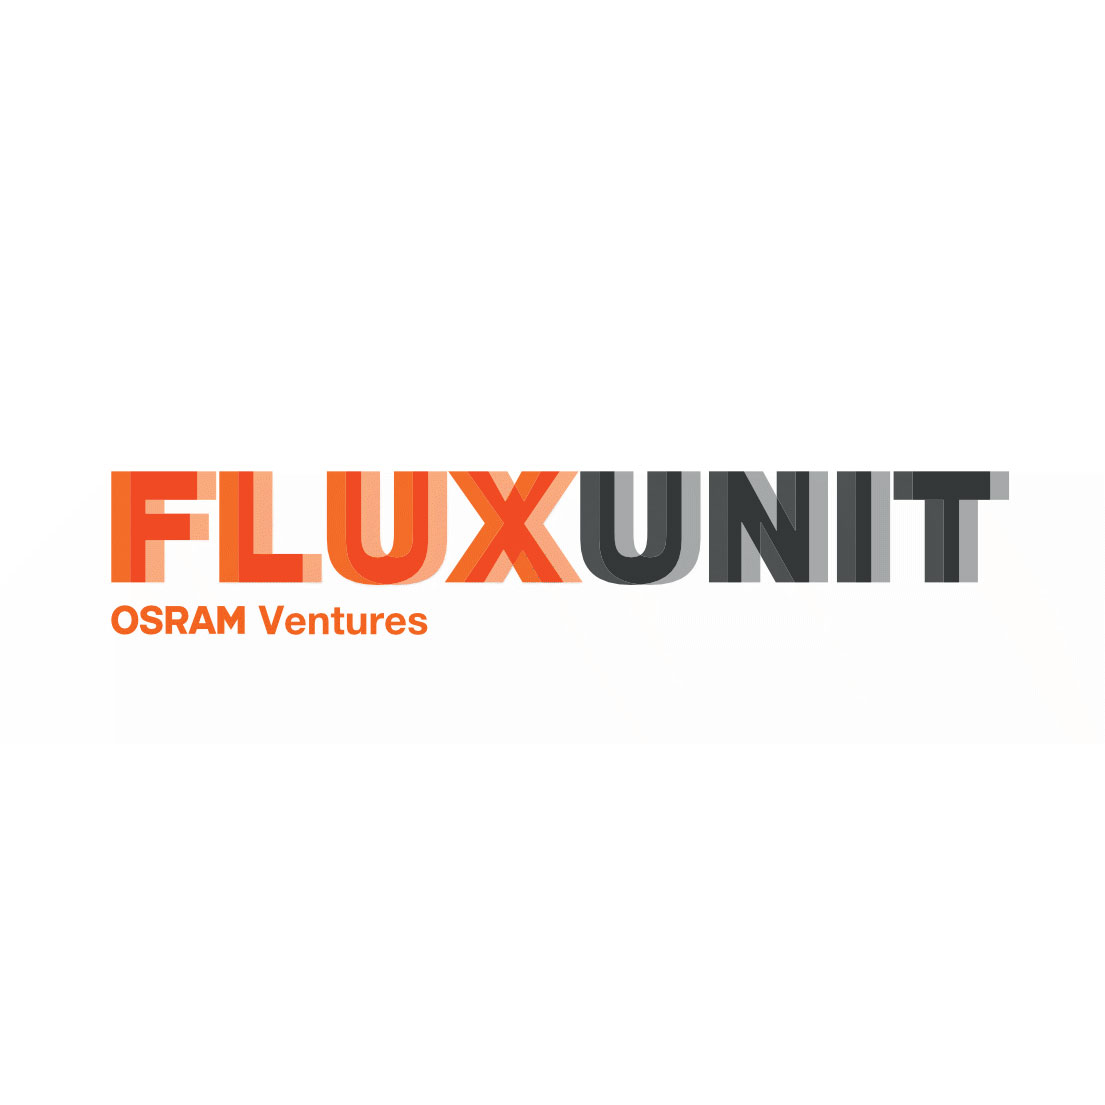 Fluxunit - OSRAM Ventures